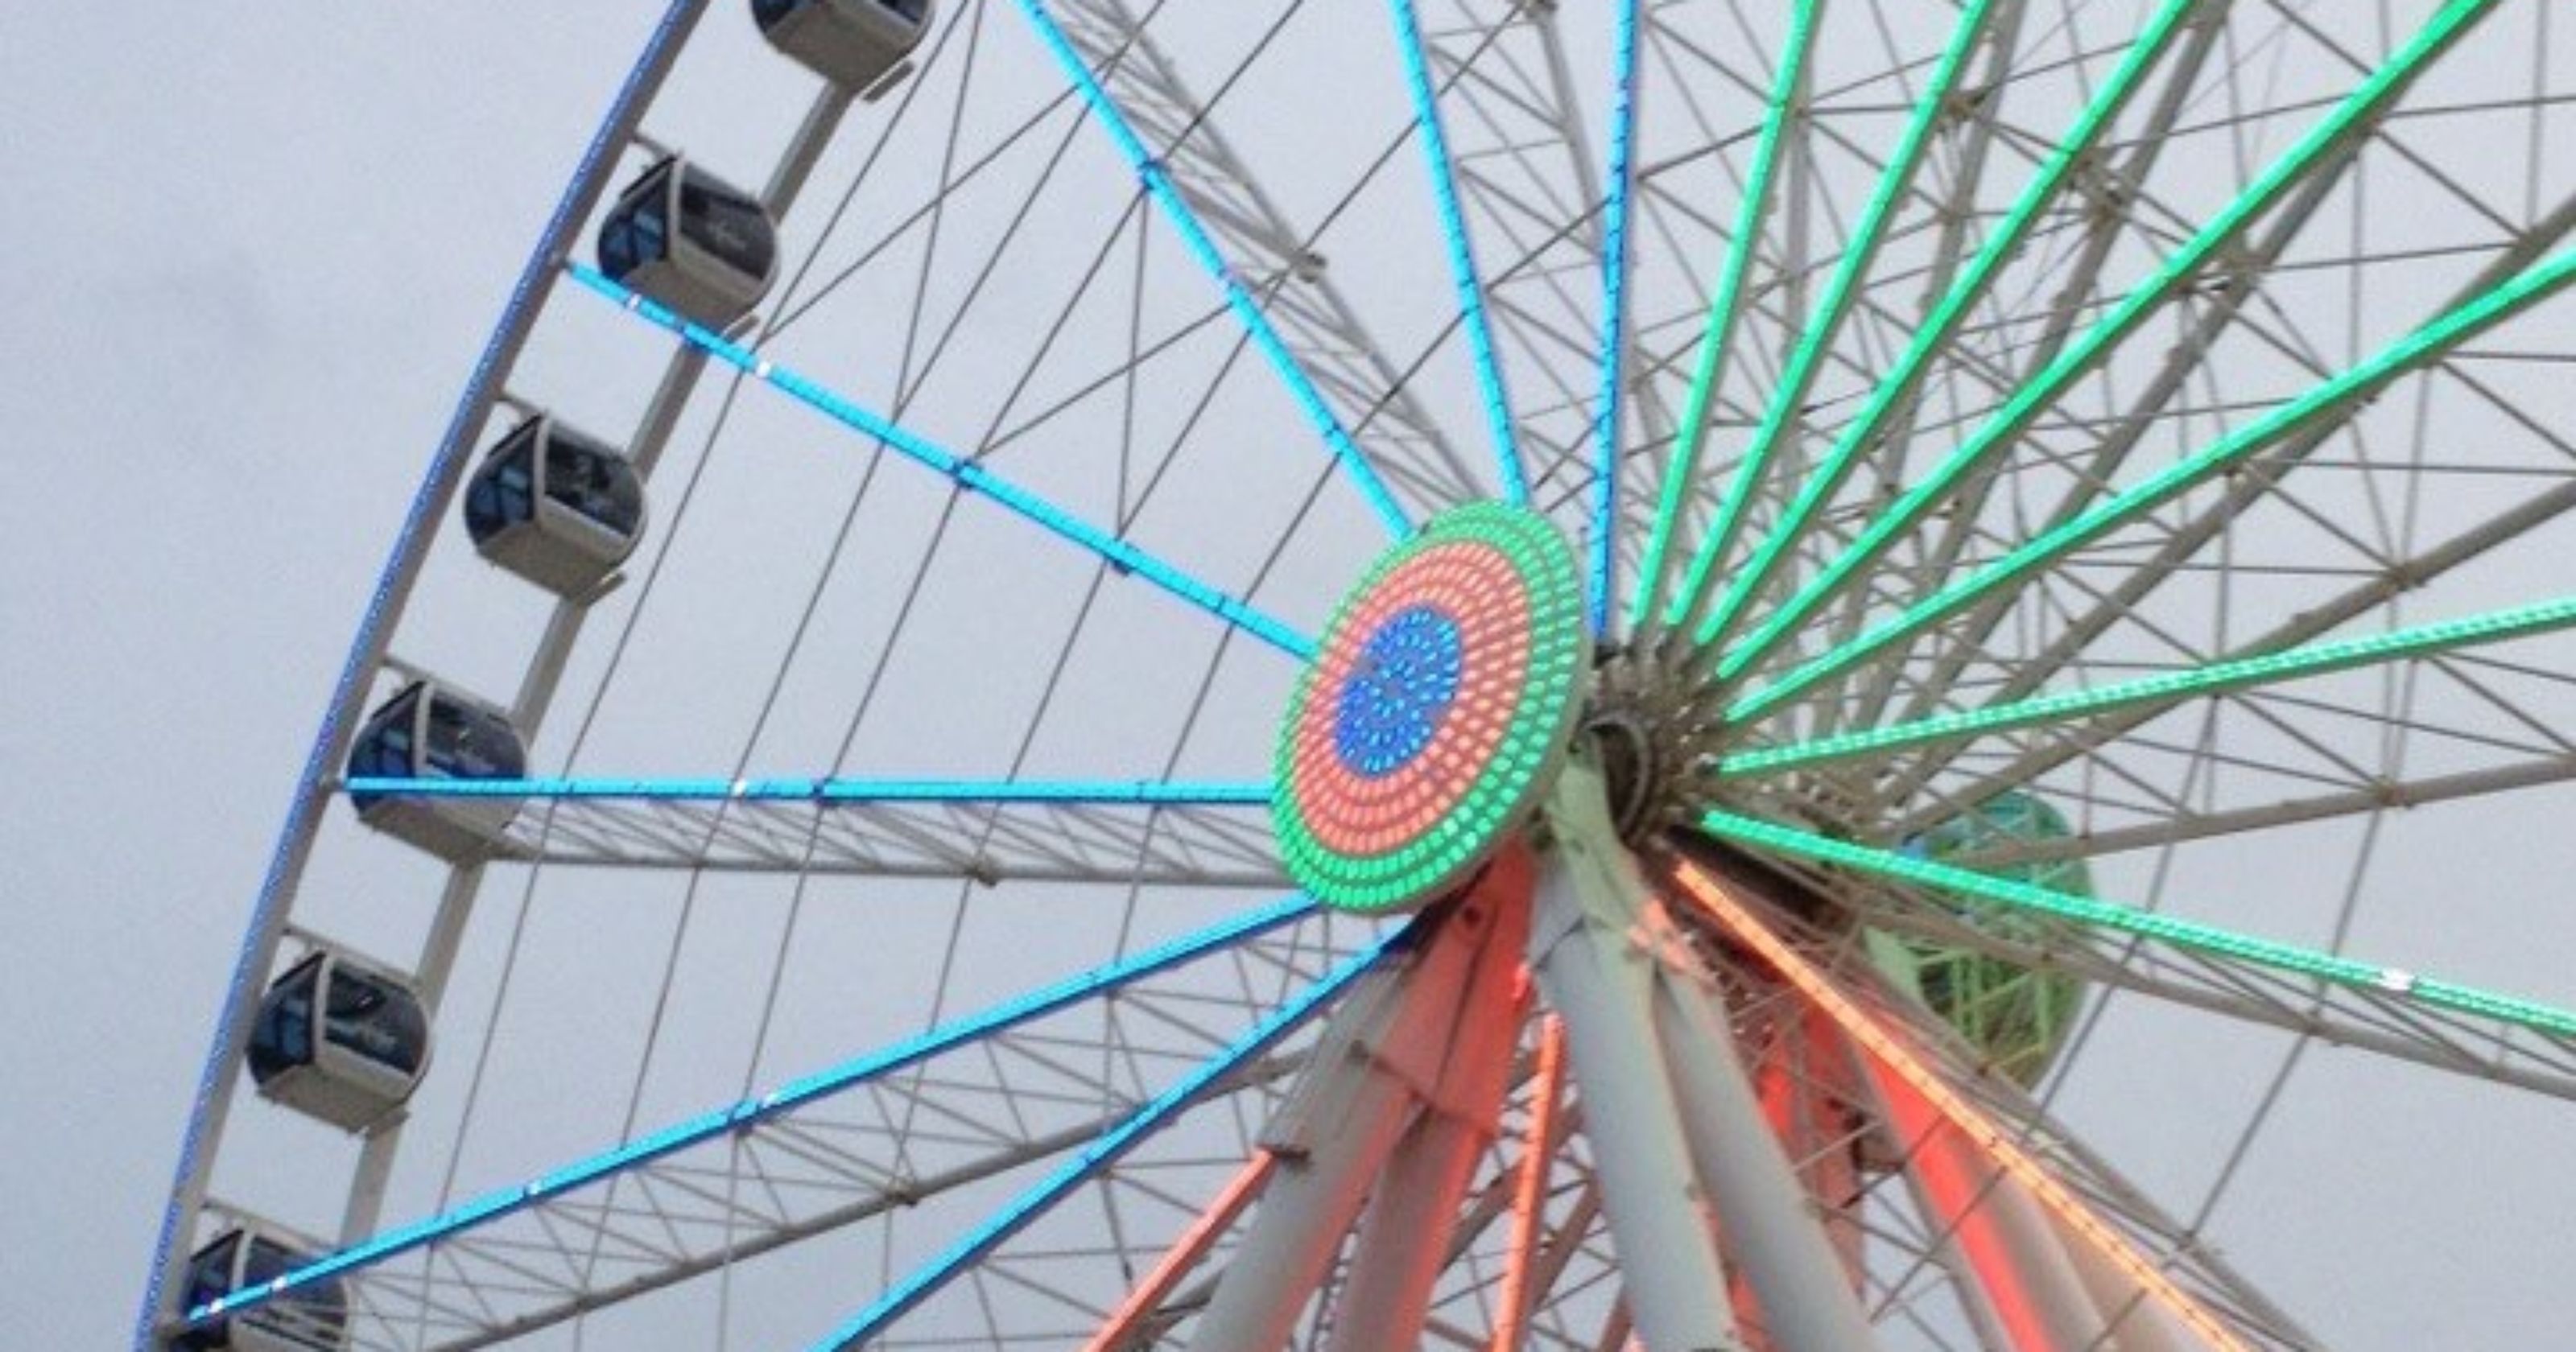 NKY Notebook: Newport prepares for Ferris wheel